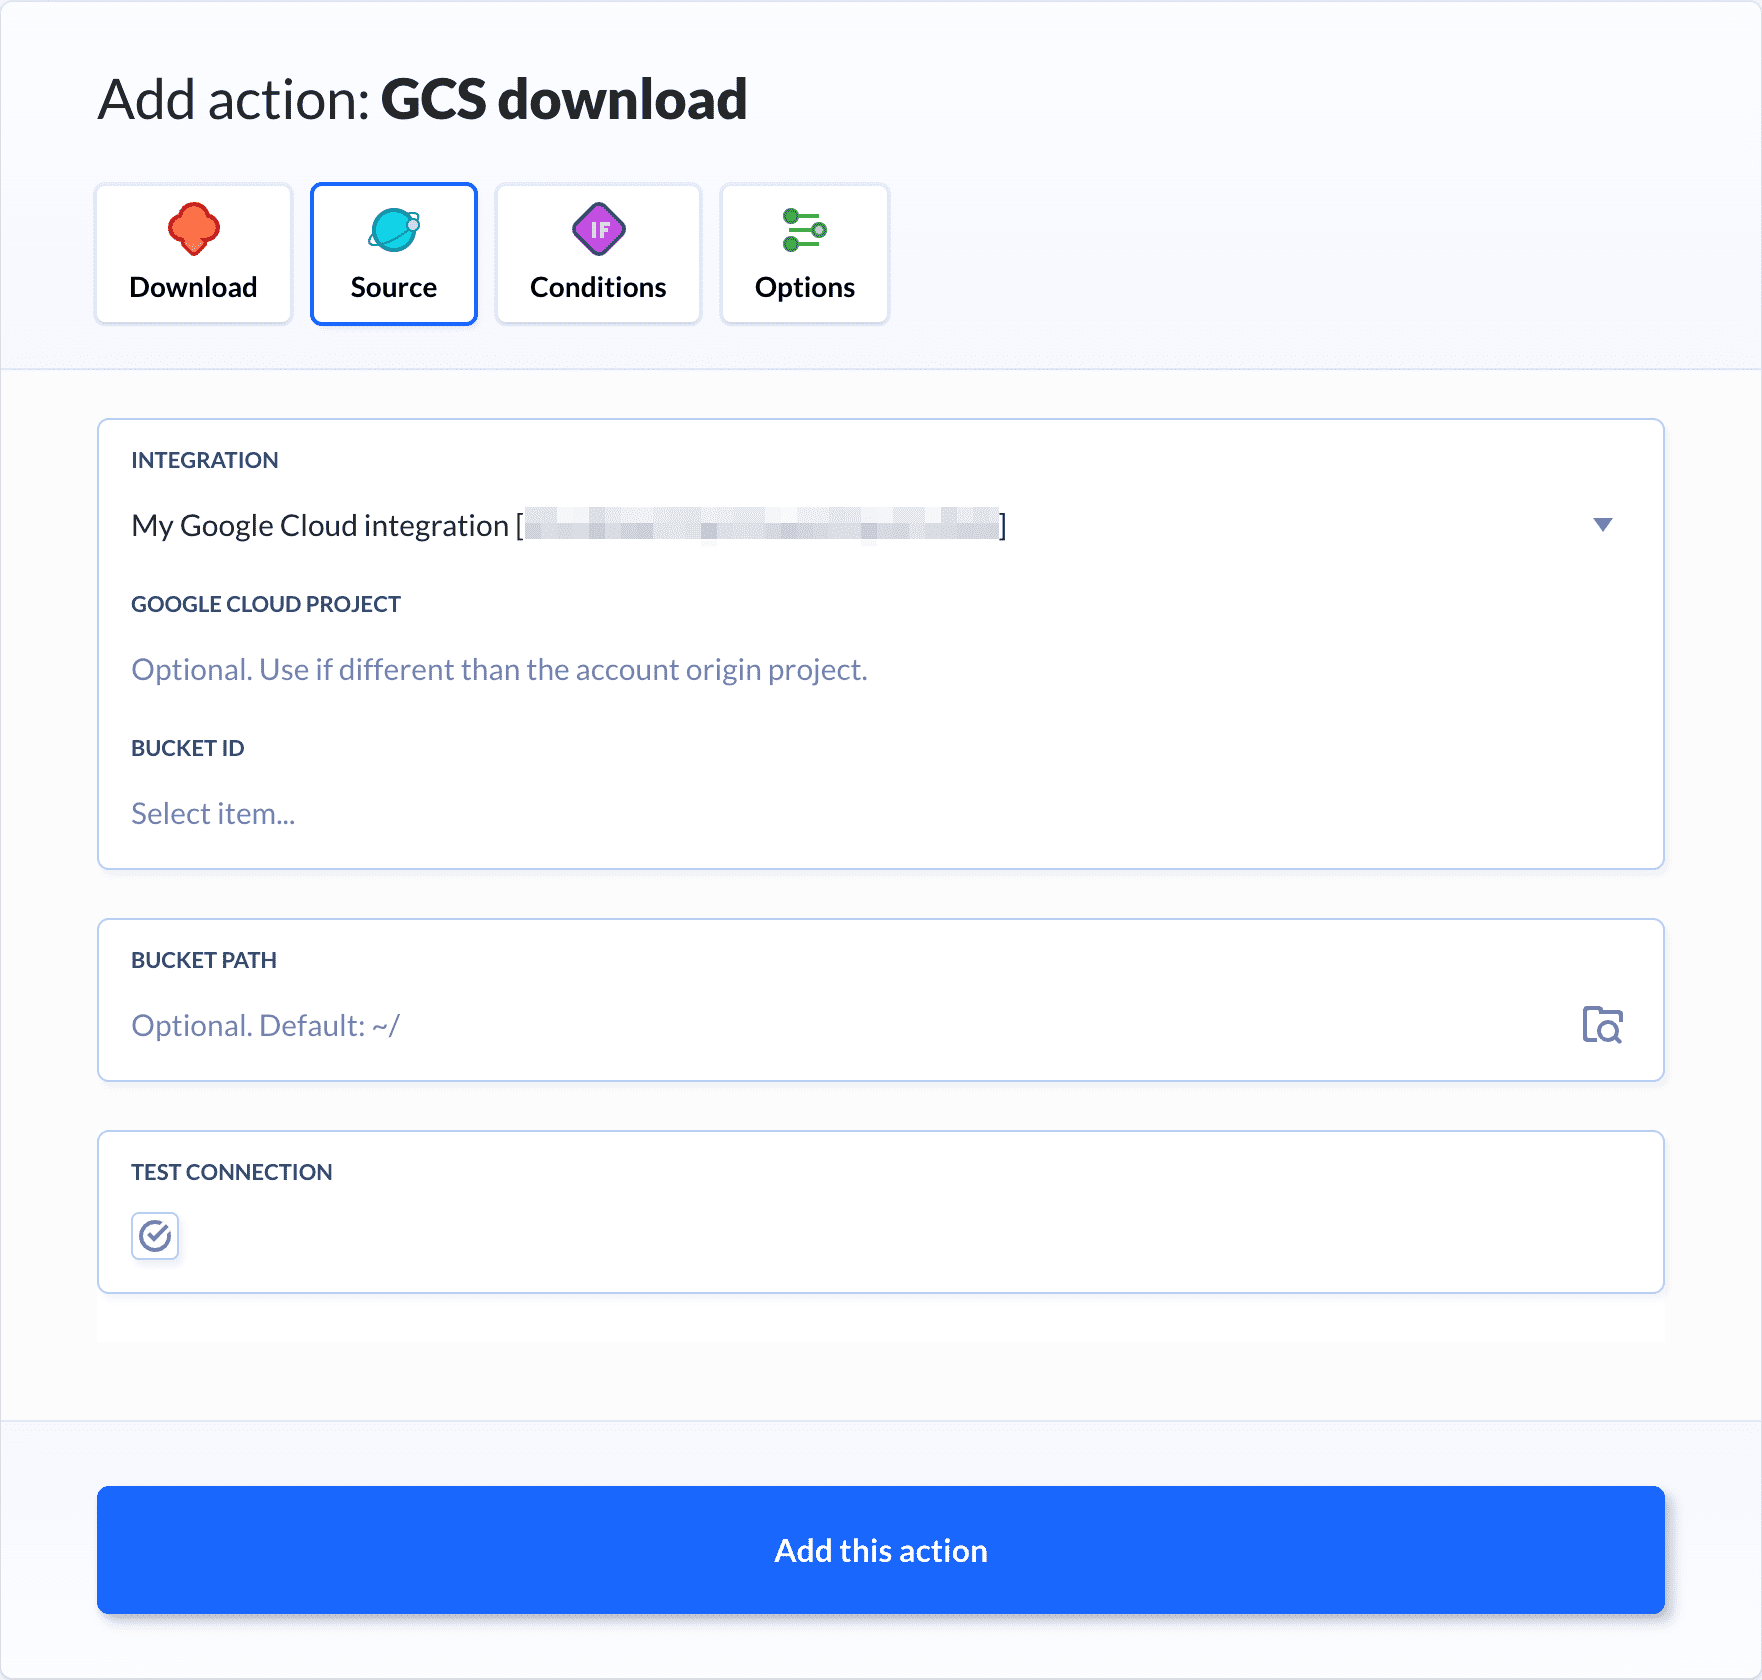 Source tab of GCS download